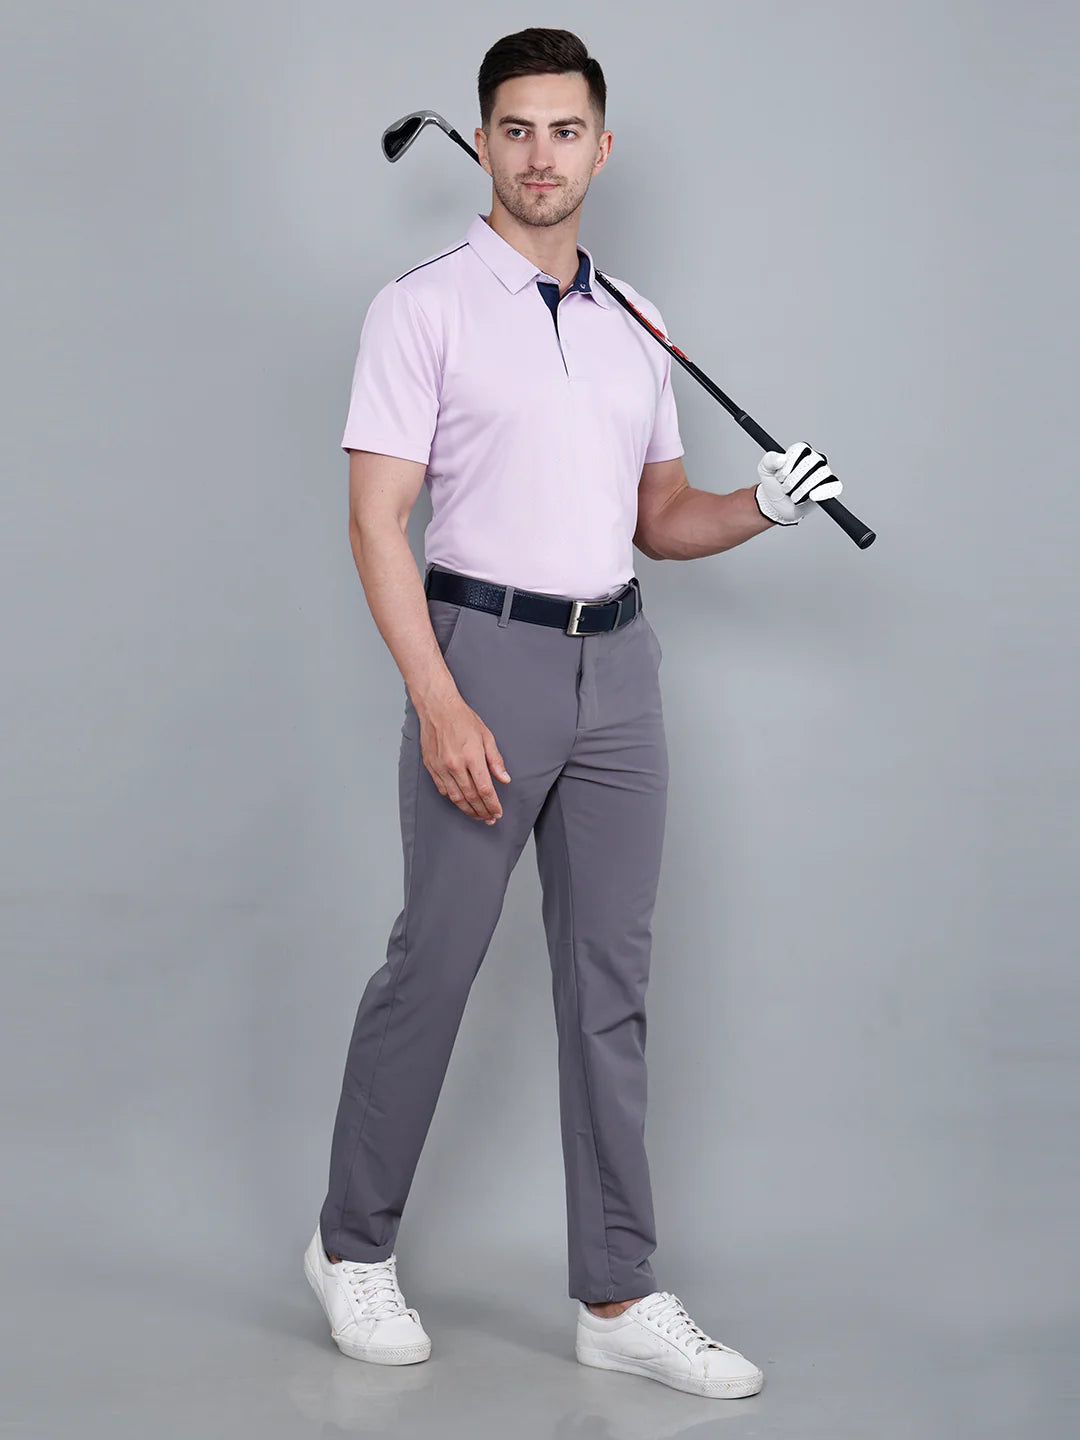 I-GOLF Men's Pink Printed Golf Polo T Shirt